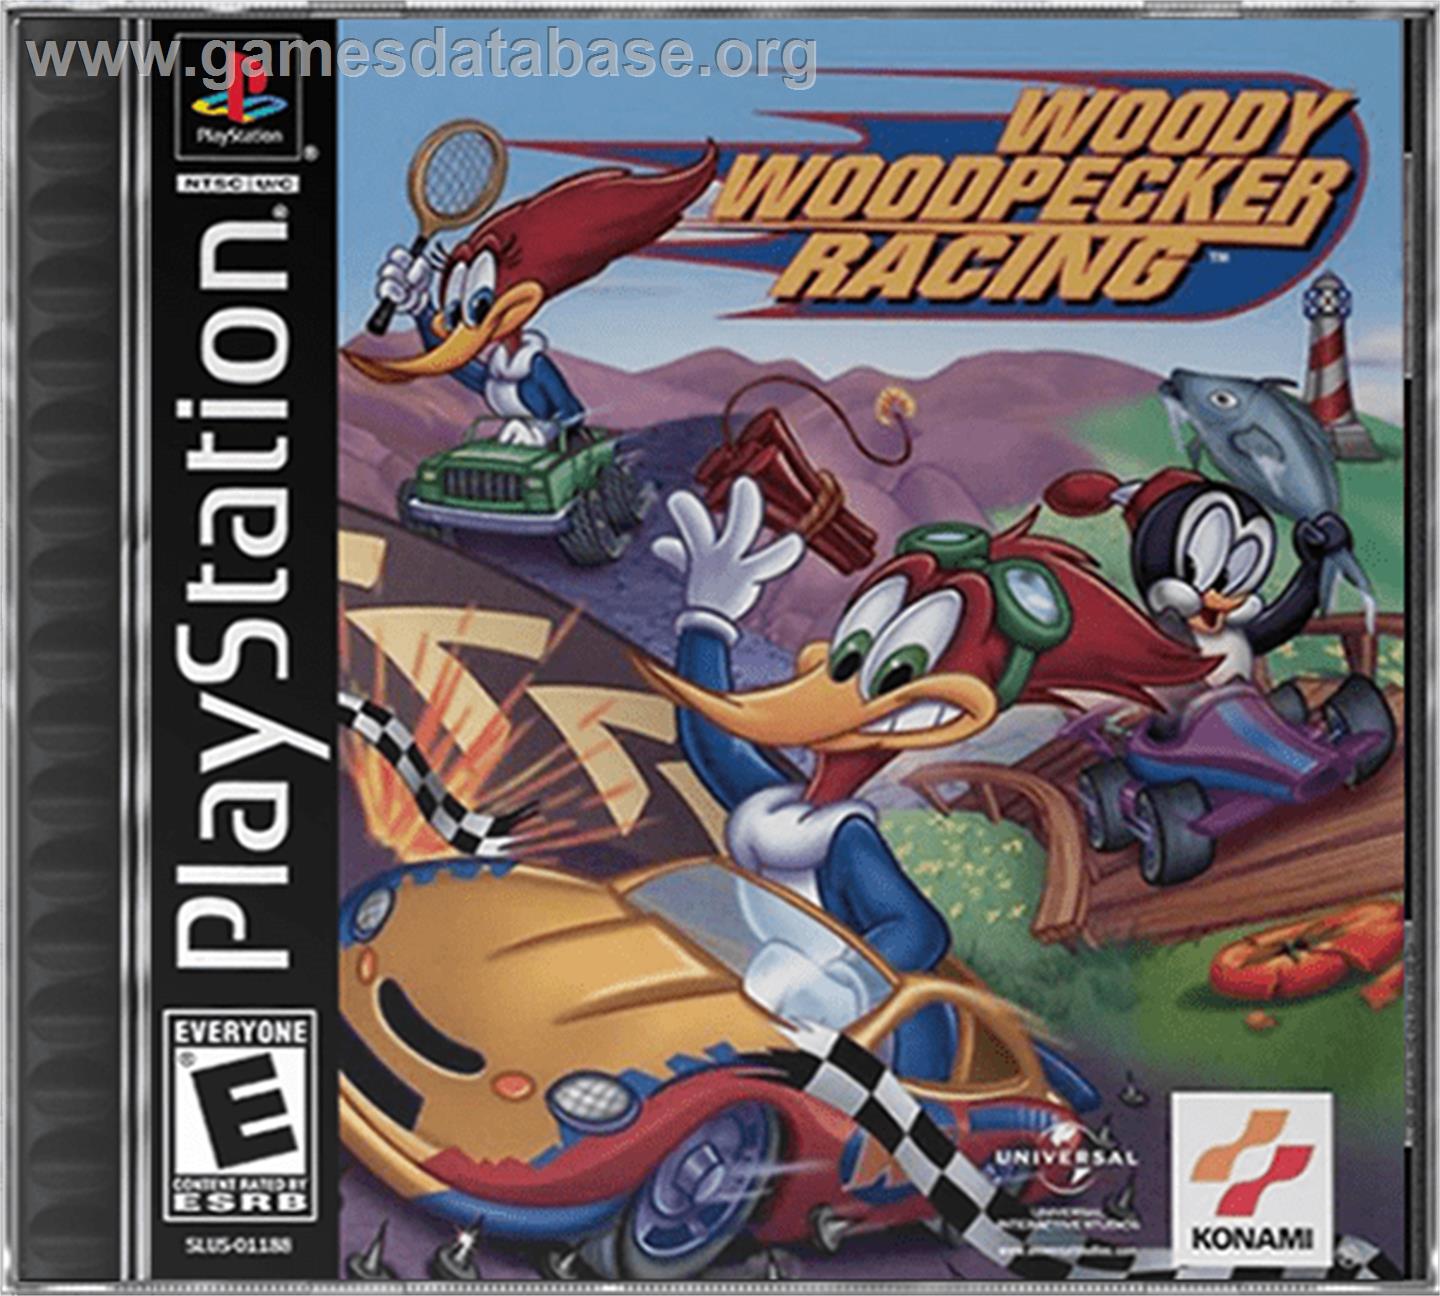 Woody Woodpecker Racing - Sony Playstation - Artwork - Box